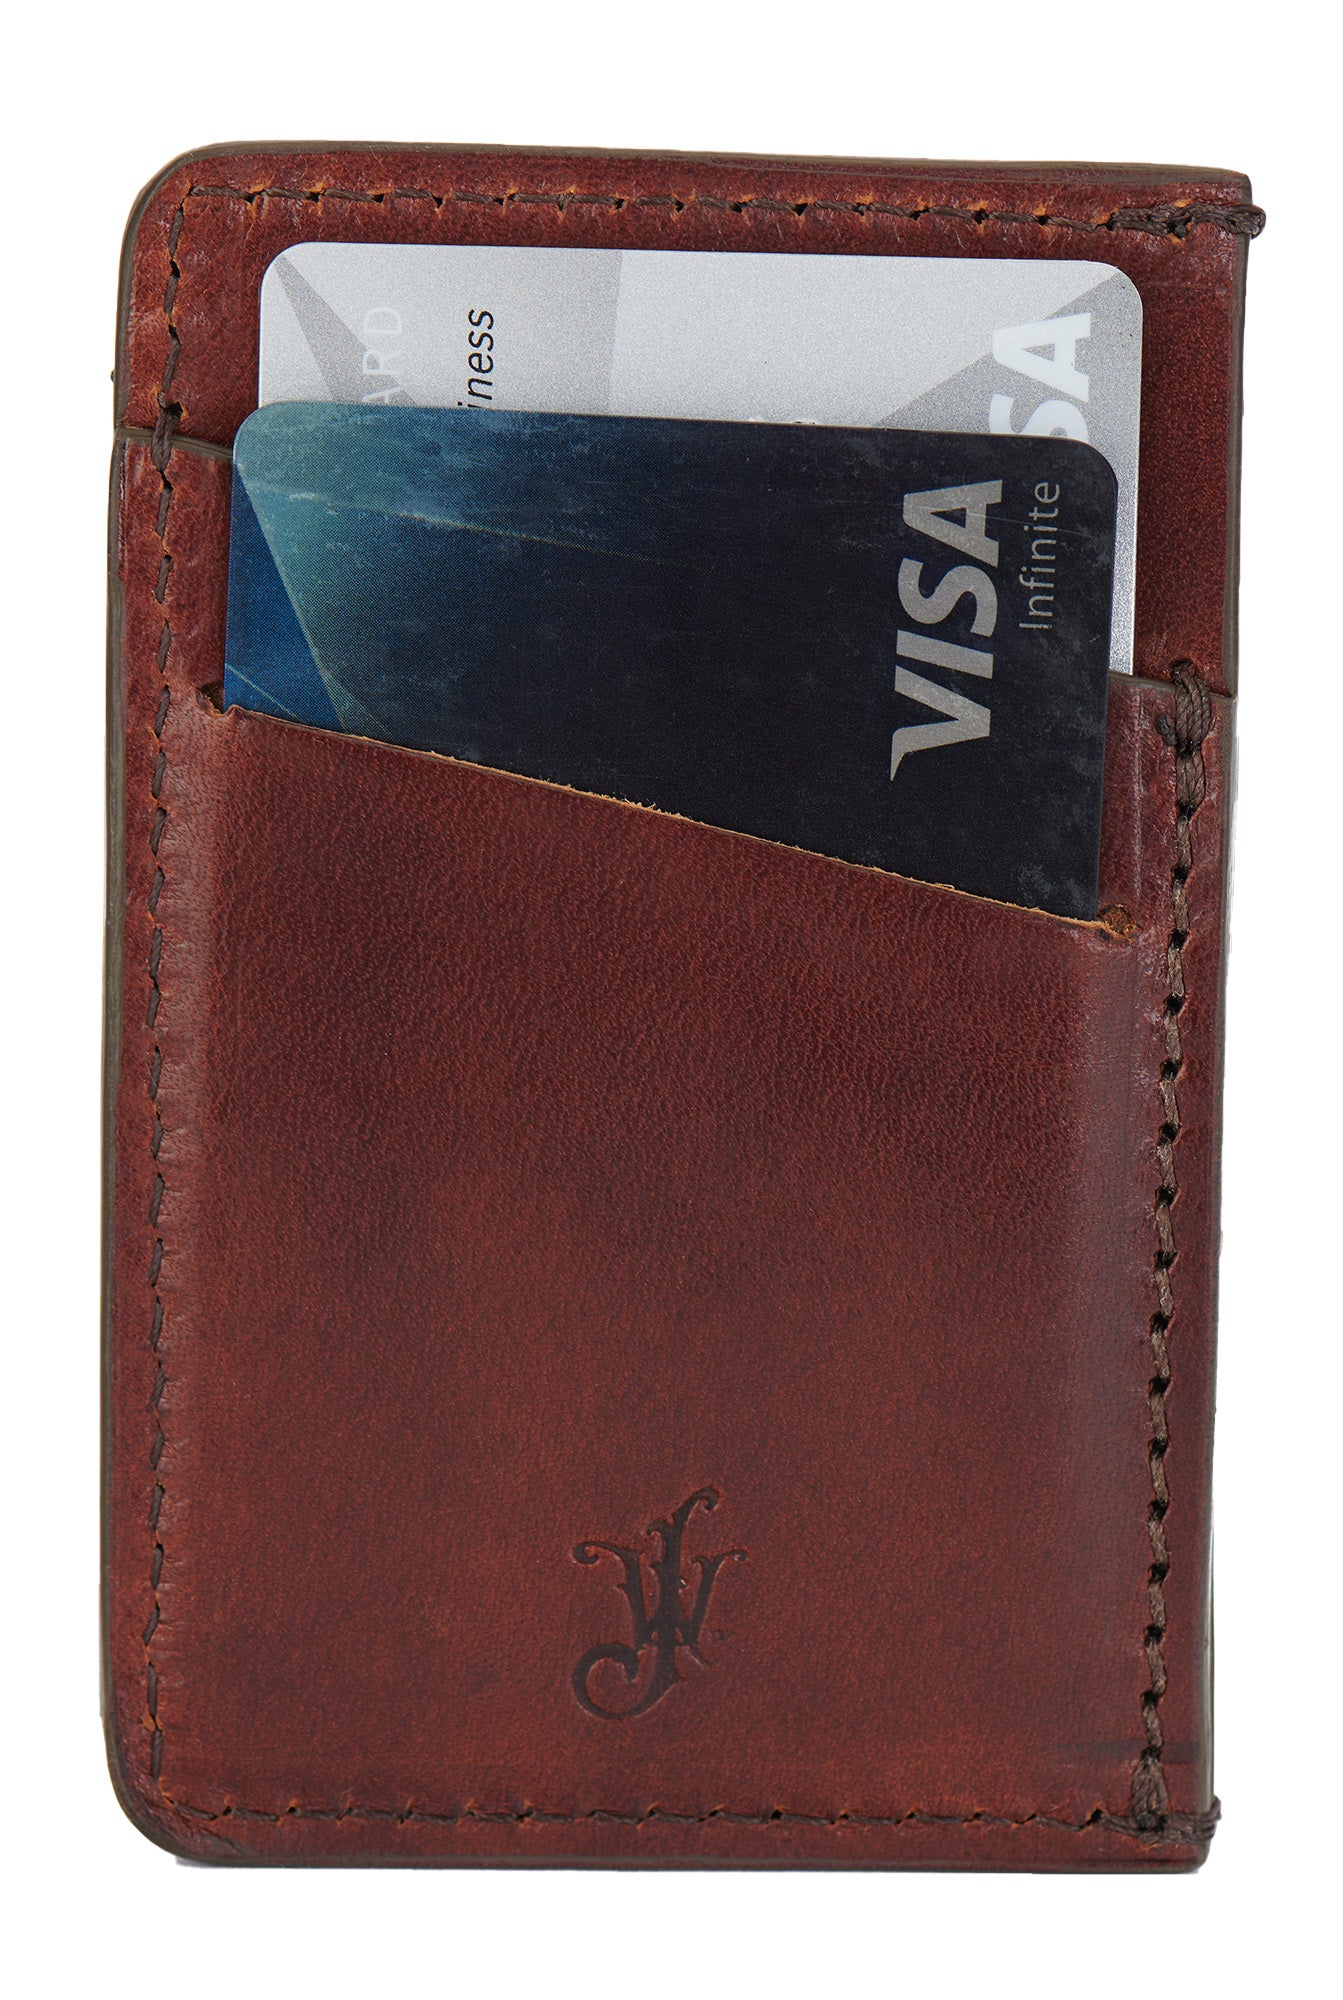 front pocket minimalist wallet in vegetable tanned full grain leather by Jackson Wayne vintage brown color